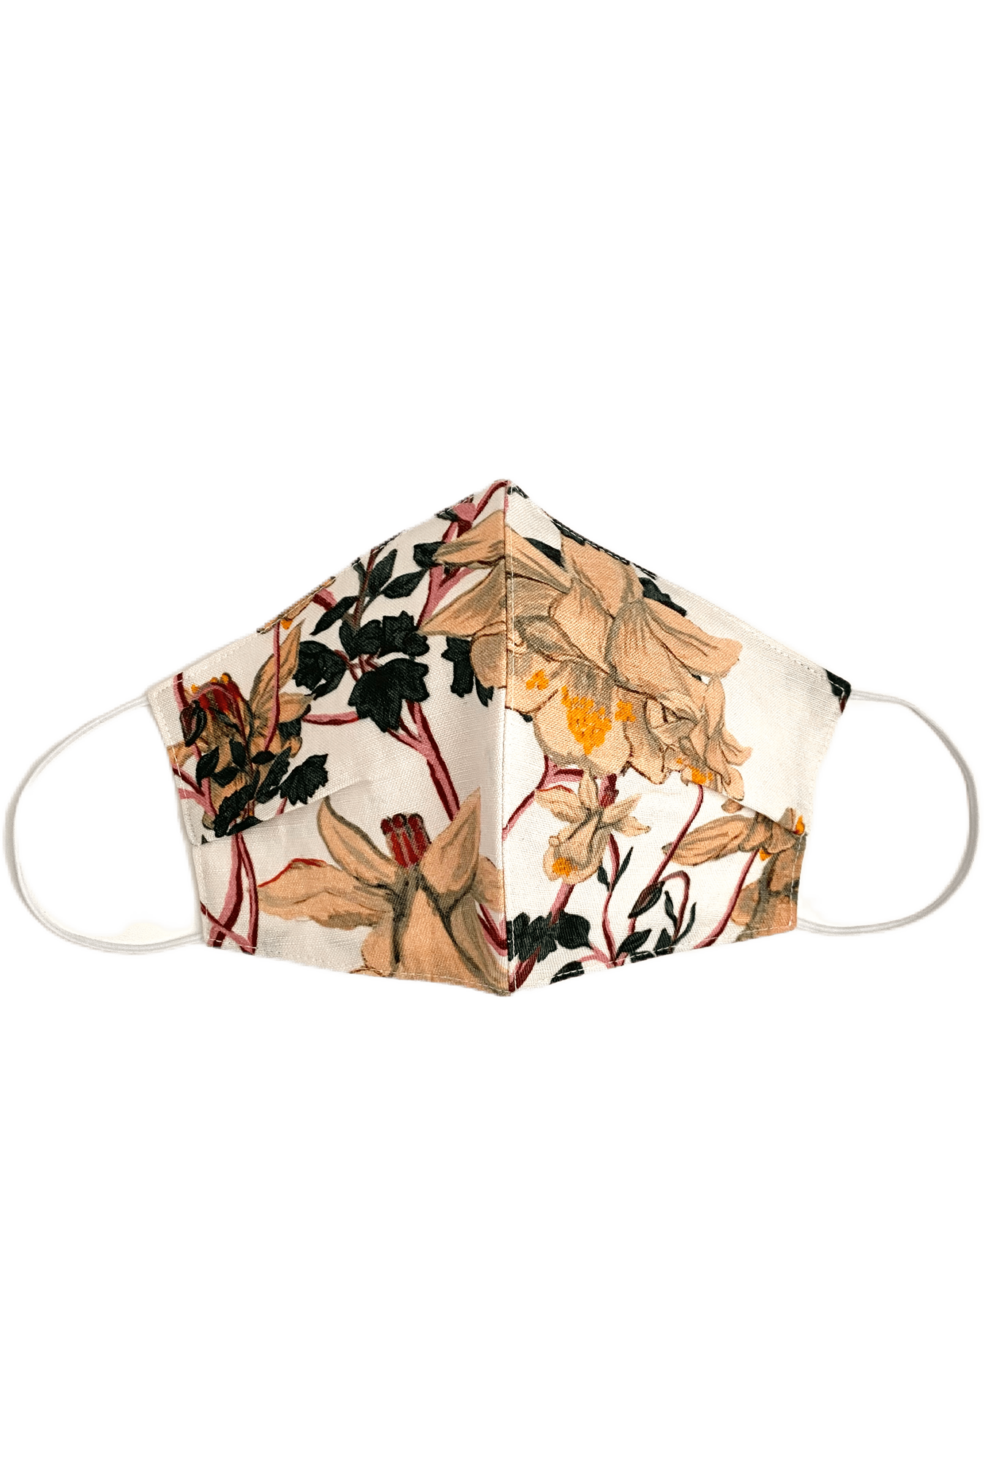 Printed Fabric Masks Fabric Masks CHRISTINE ALCALAY Floral (Linen/Rayon Shell) Extra Small 